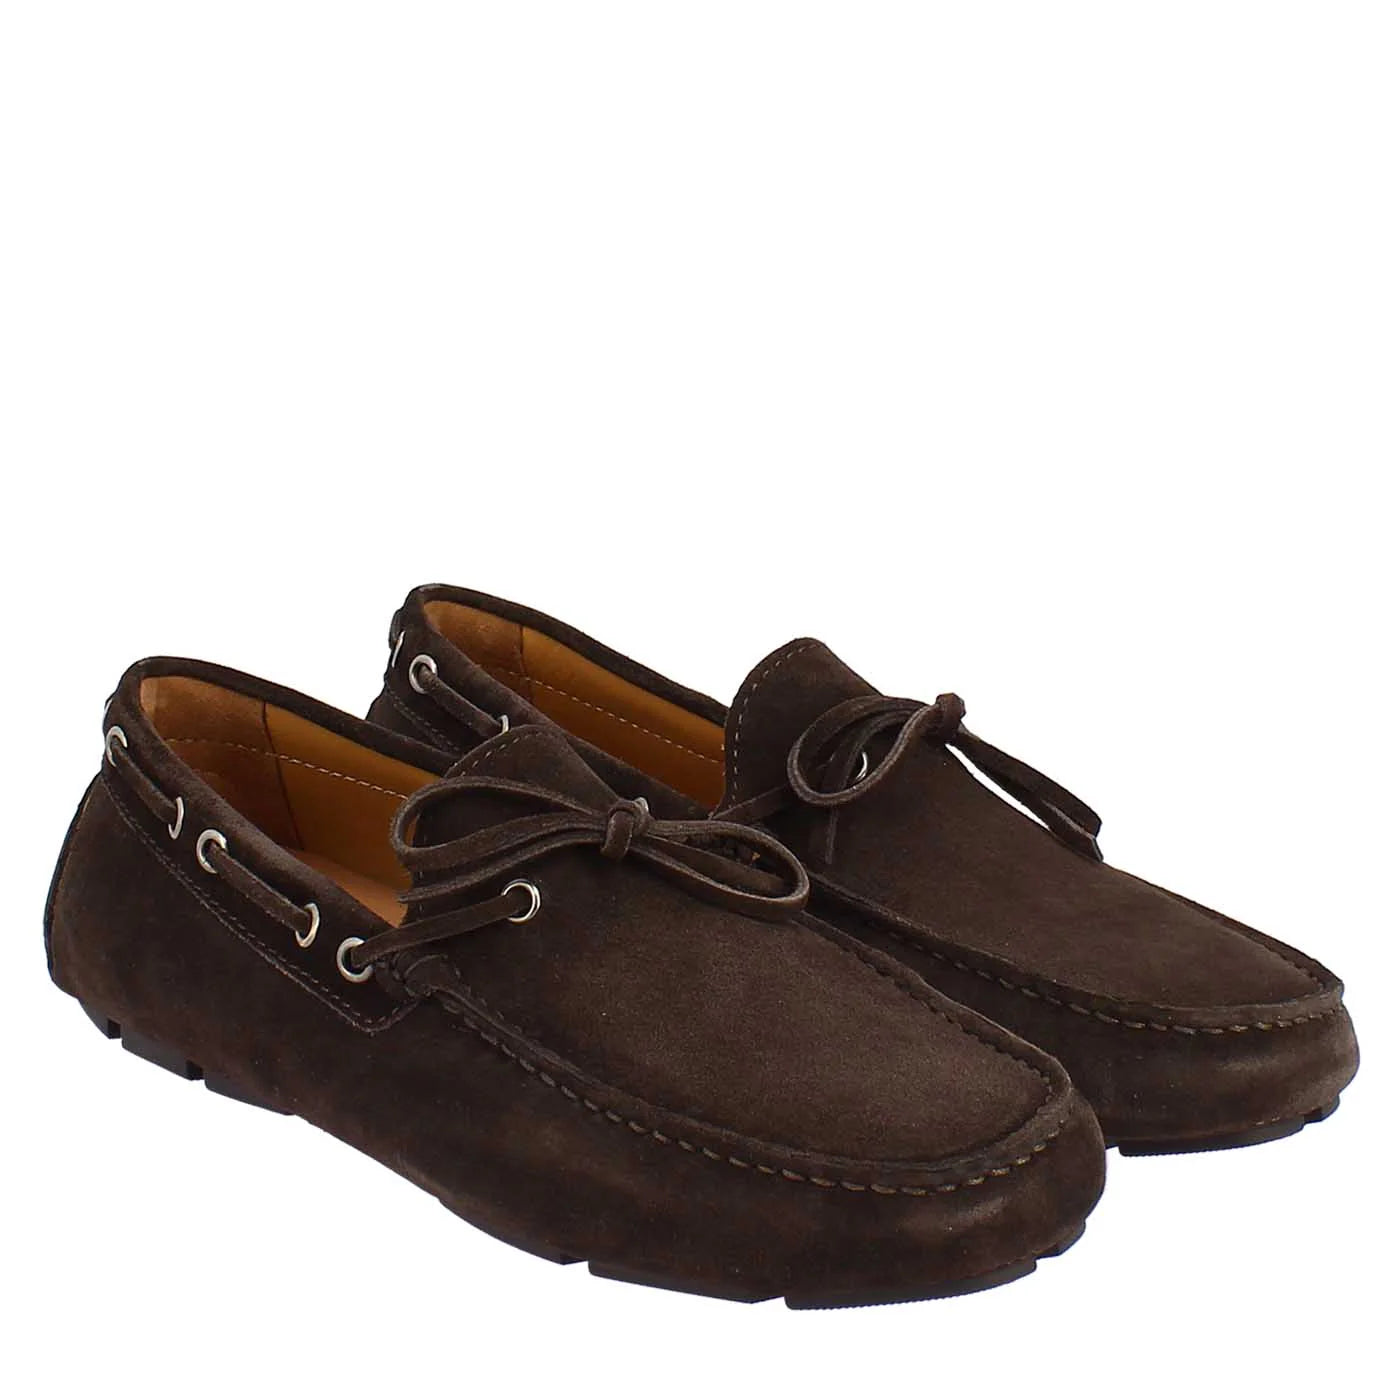 Handmade Carshoe Loafers in Brown Suede